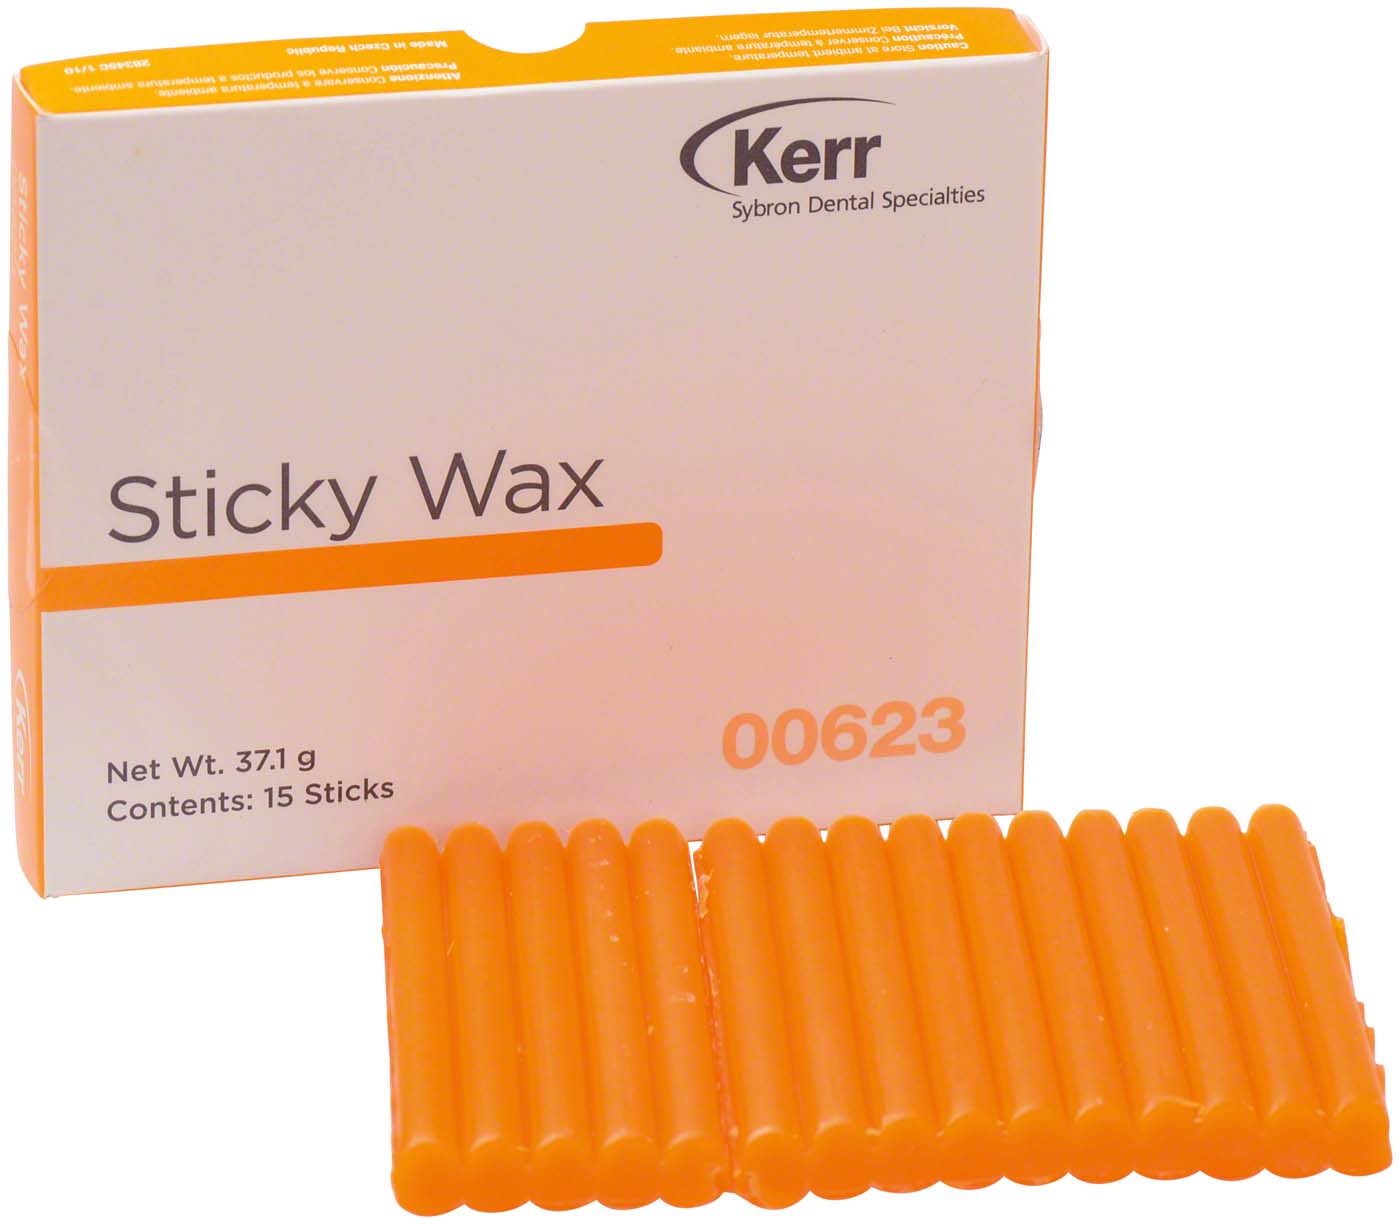 Sticky Wax Kerr